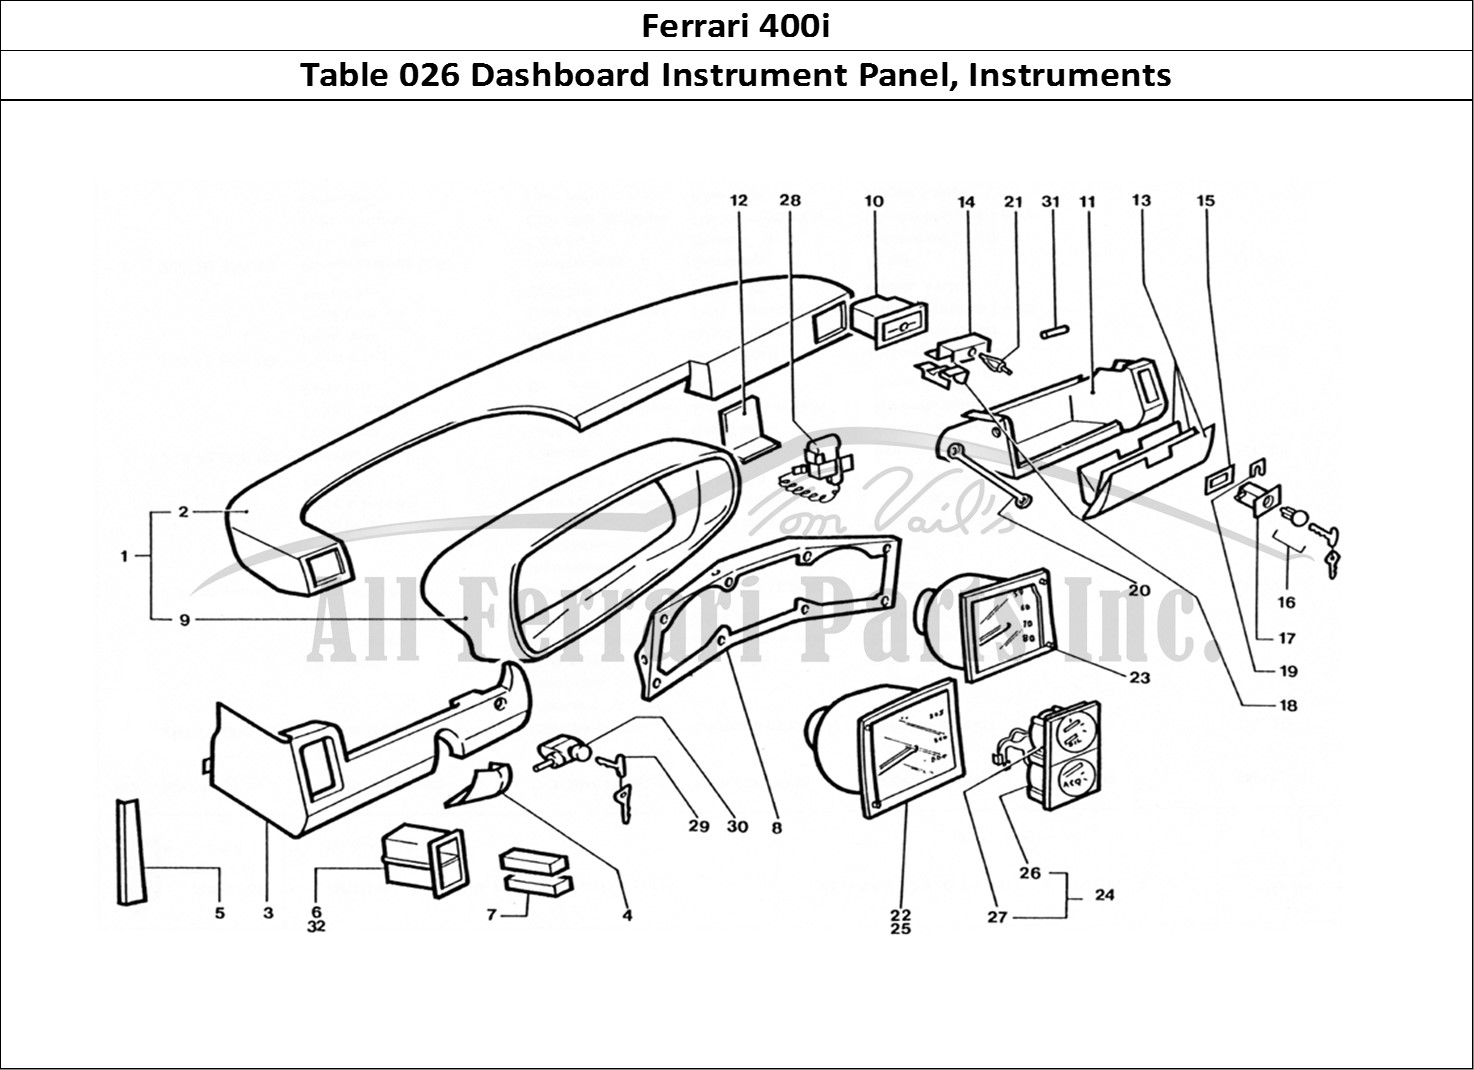 Ferrari Parts Ferrari 400 GT (Coachwork) Page 026 Dash & Guages